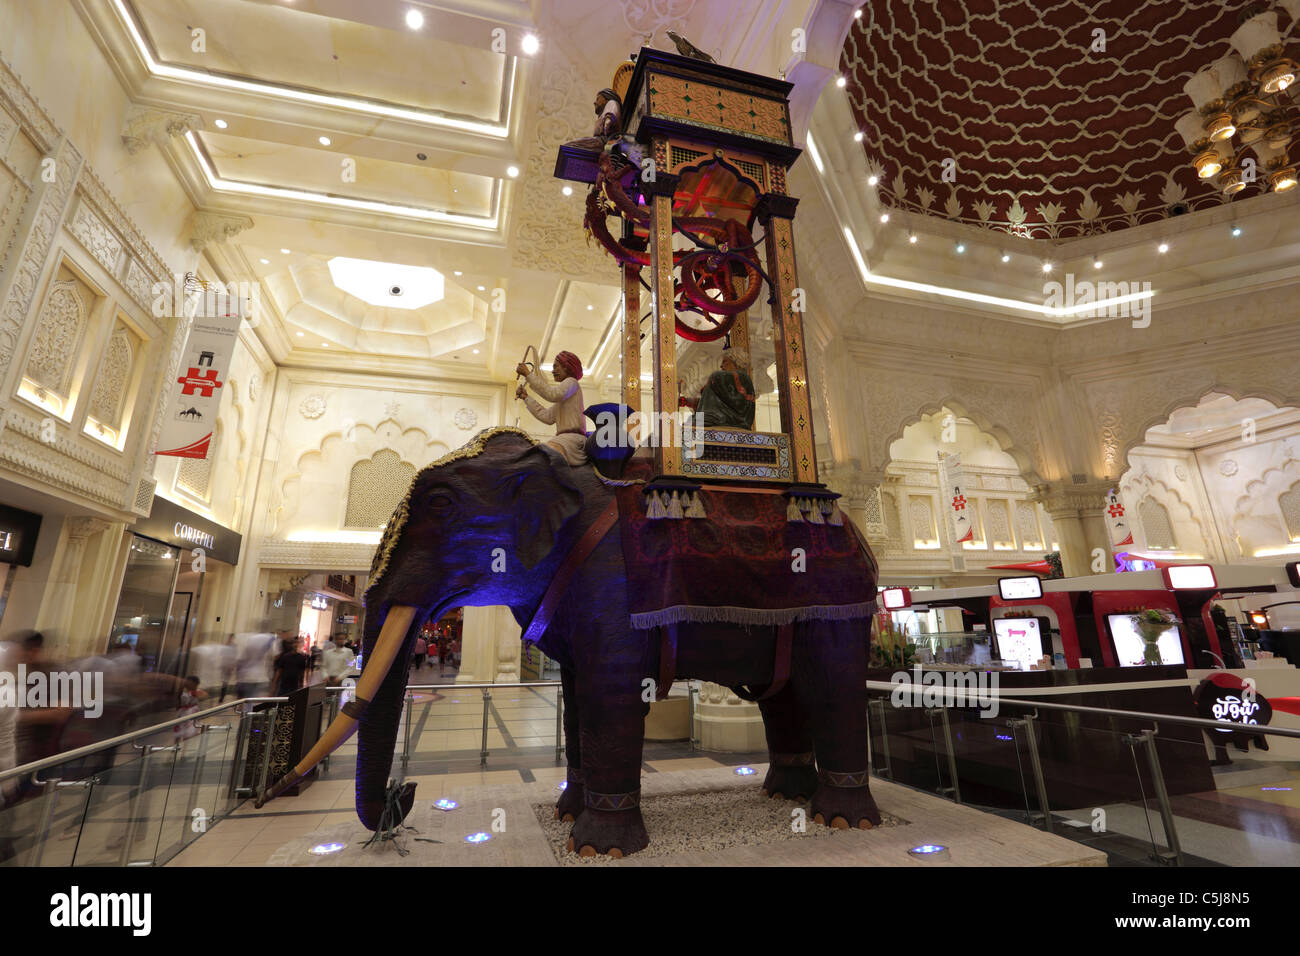 India Court in Ibn Battuta Shopping Mall in Dubai, United Arab Emirates Stock Photo